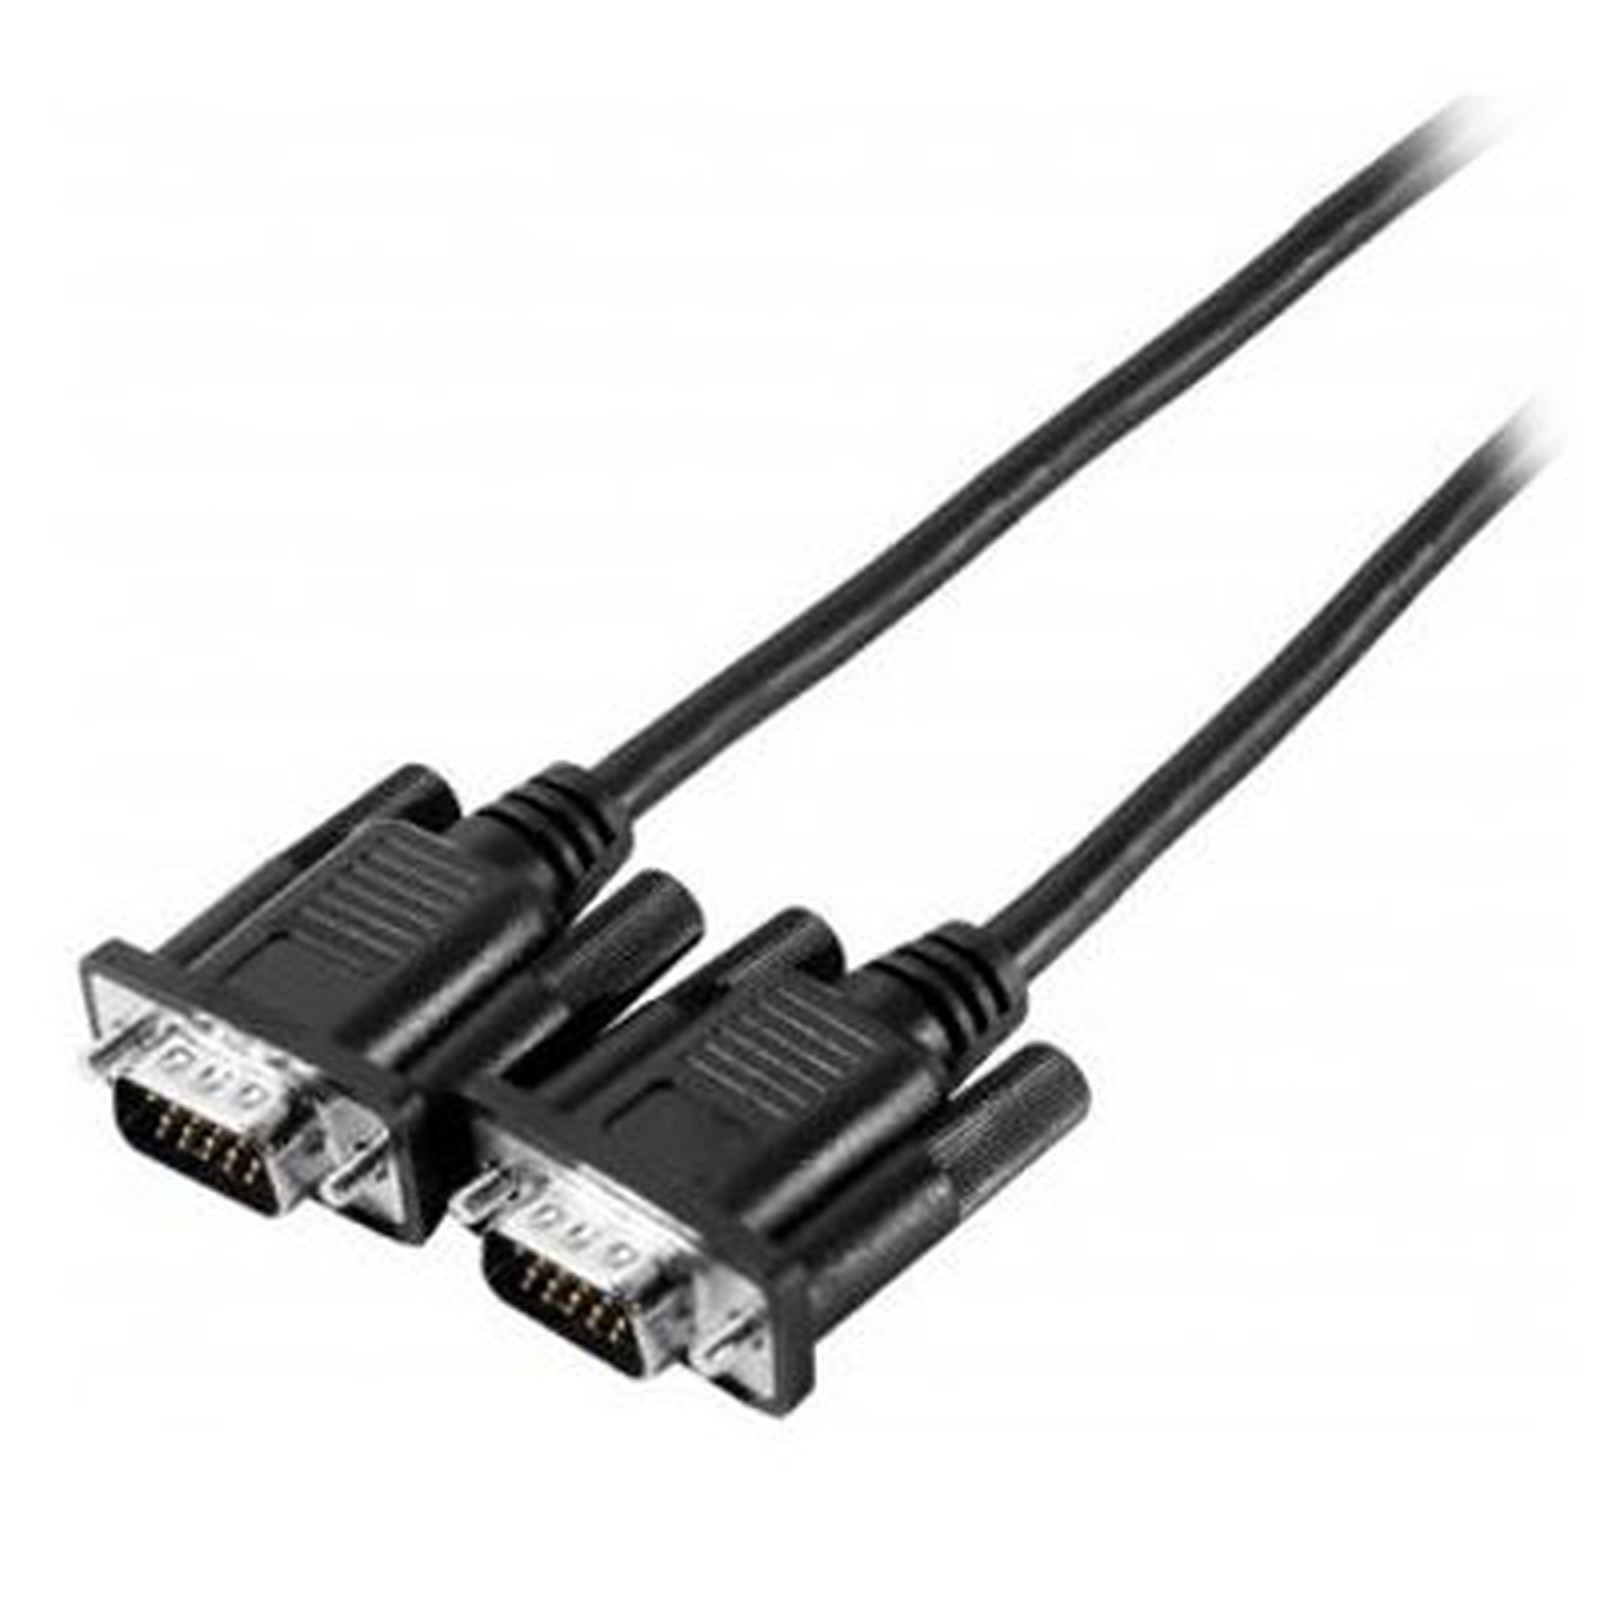 Cable VGA male / male (5 mètres) - VGA Generique